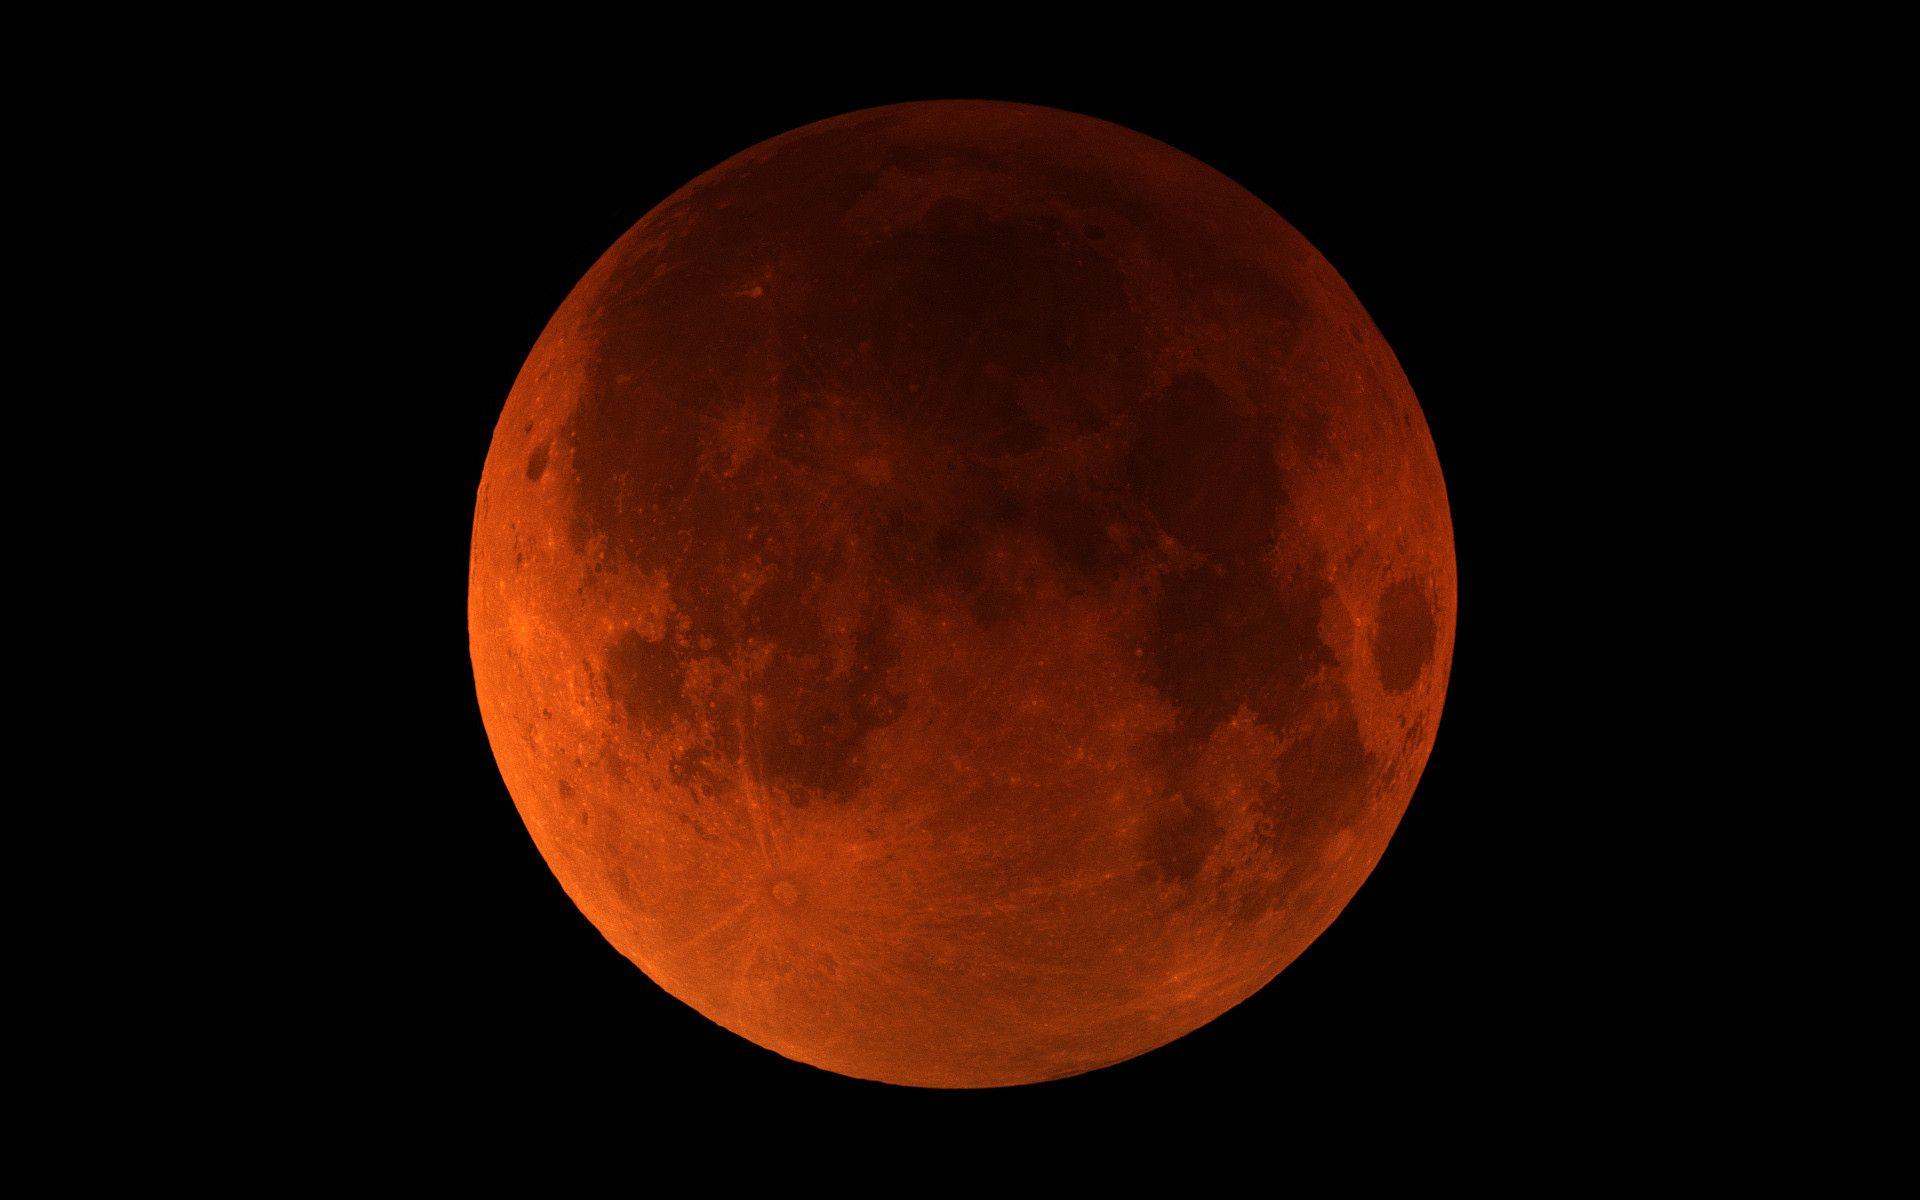 Lunar Eclipse April 2014 Picture 36435 High Resolution. download